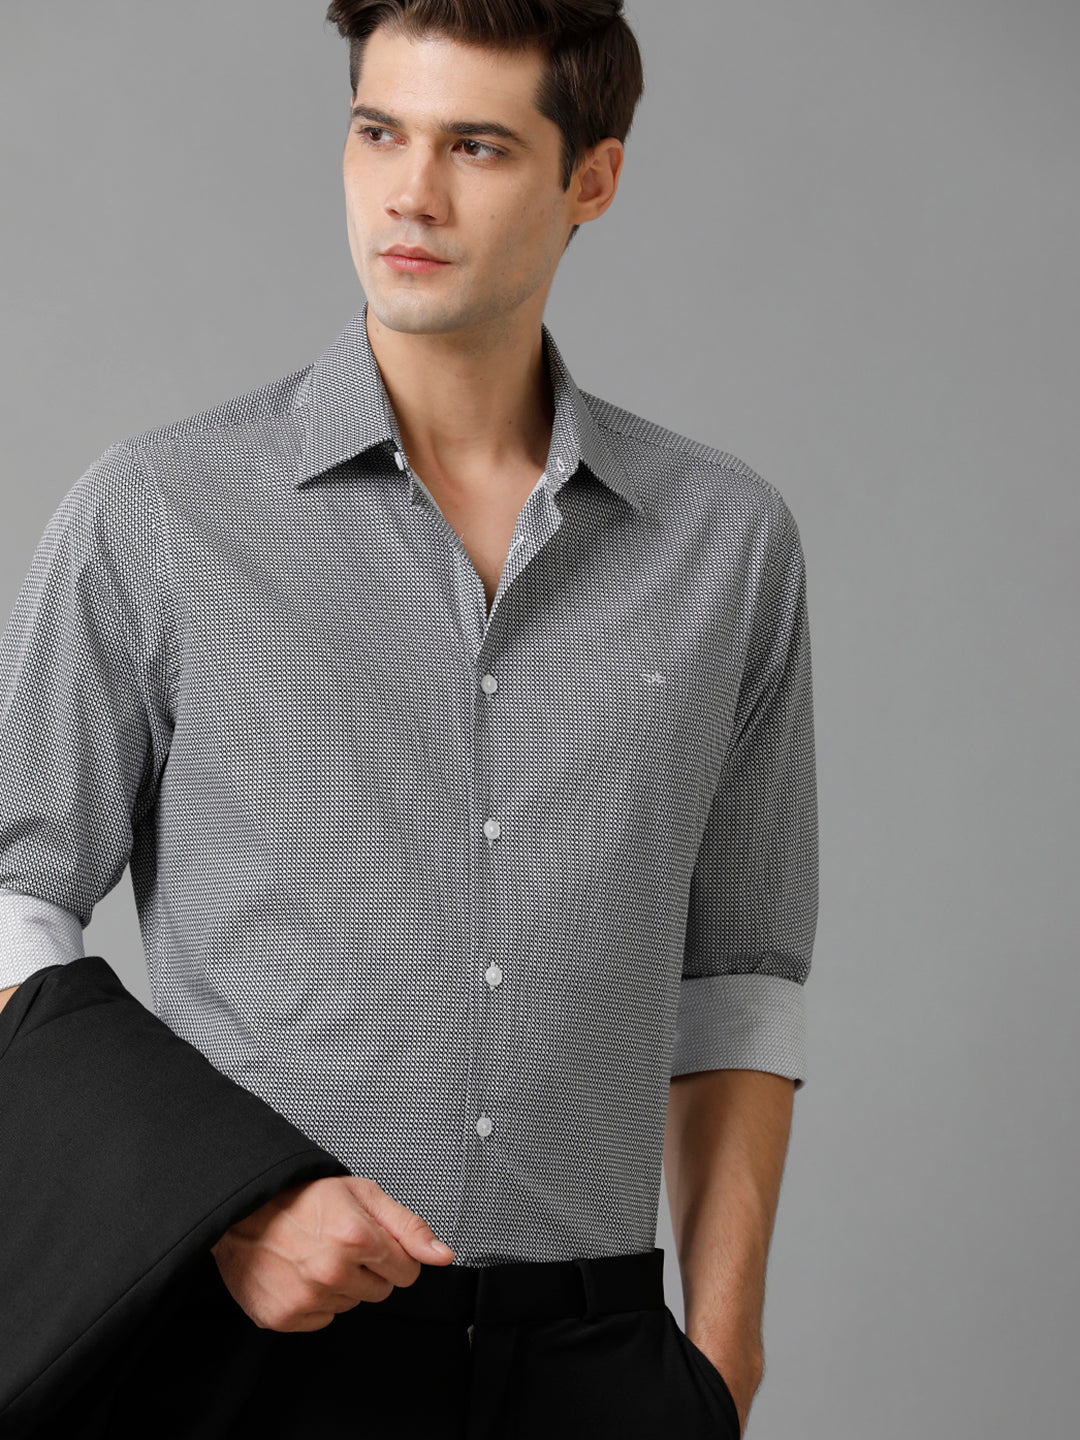 Aldeno Mens Slim Fit Black/White Geometric Print Casual Cotton Stretch Shirt (PIBAK)